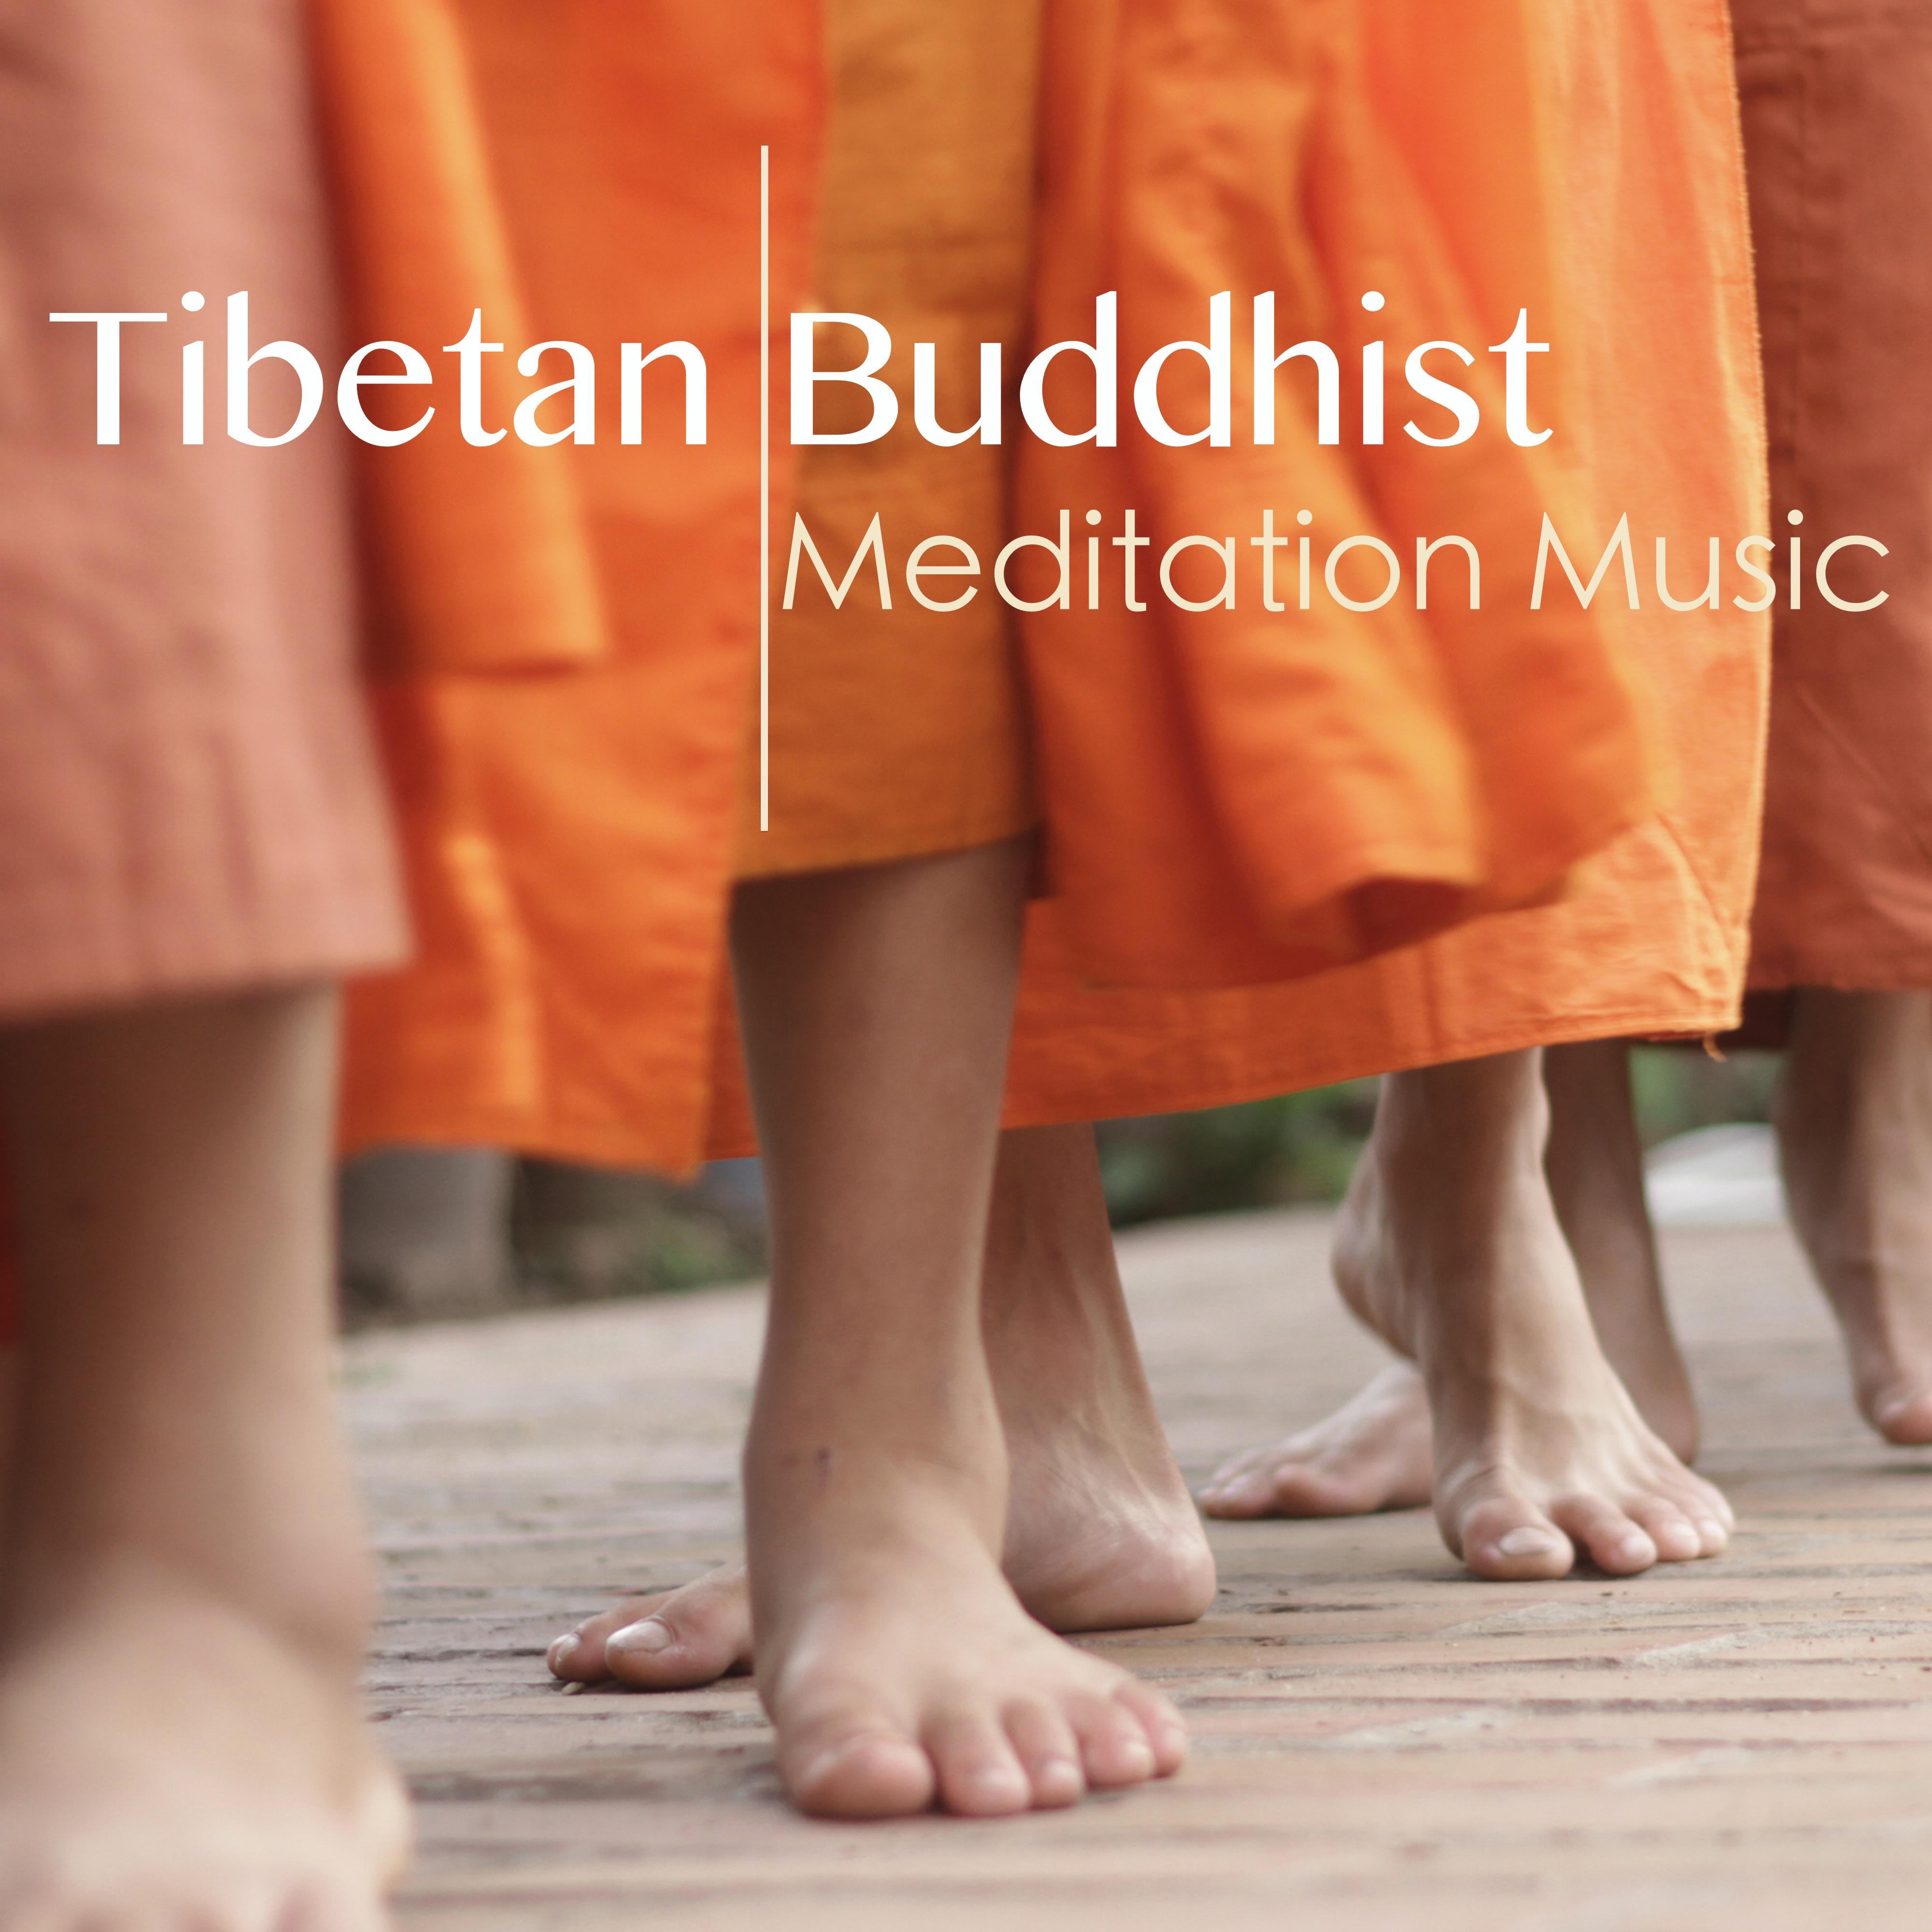 Buddhist Meditation Song for Om Chanting